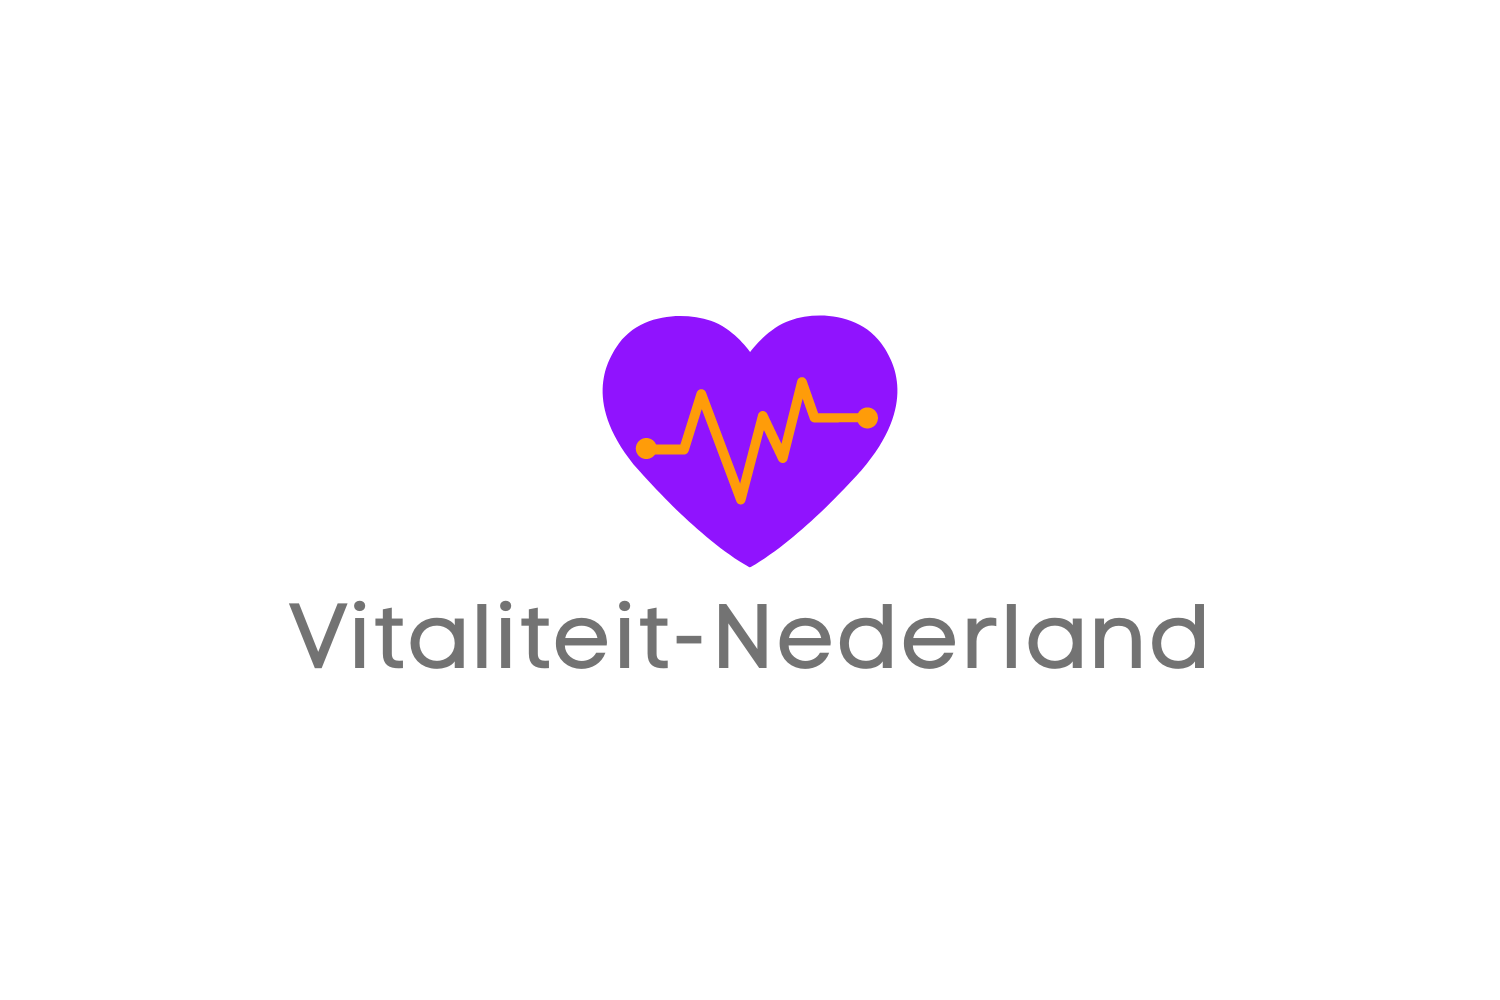 vitaliteit nederland logo1